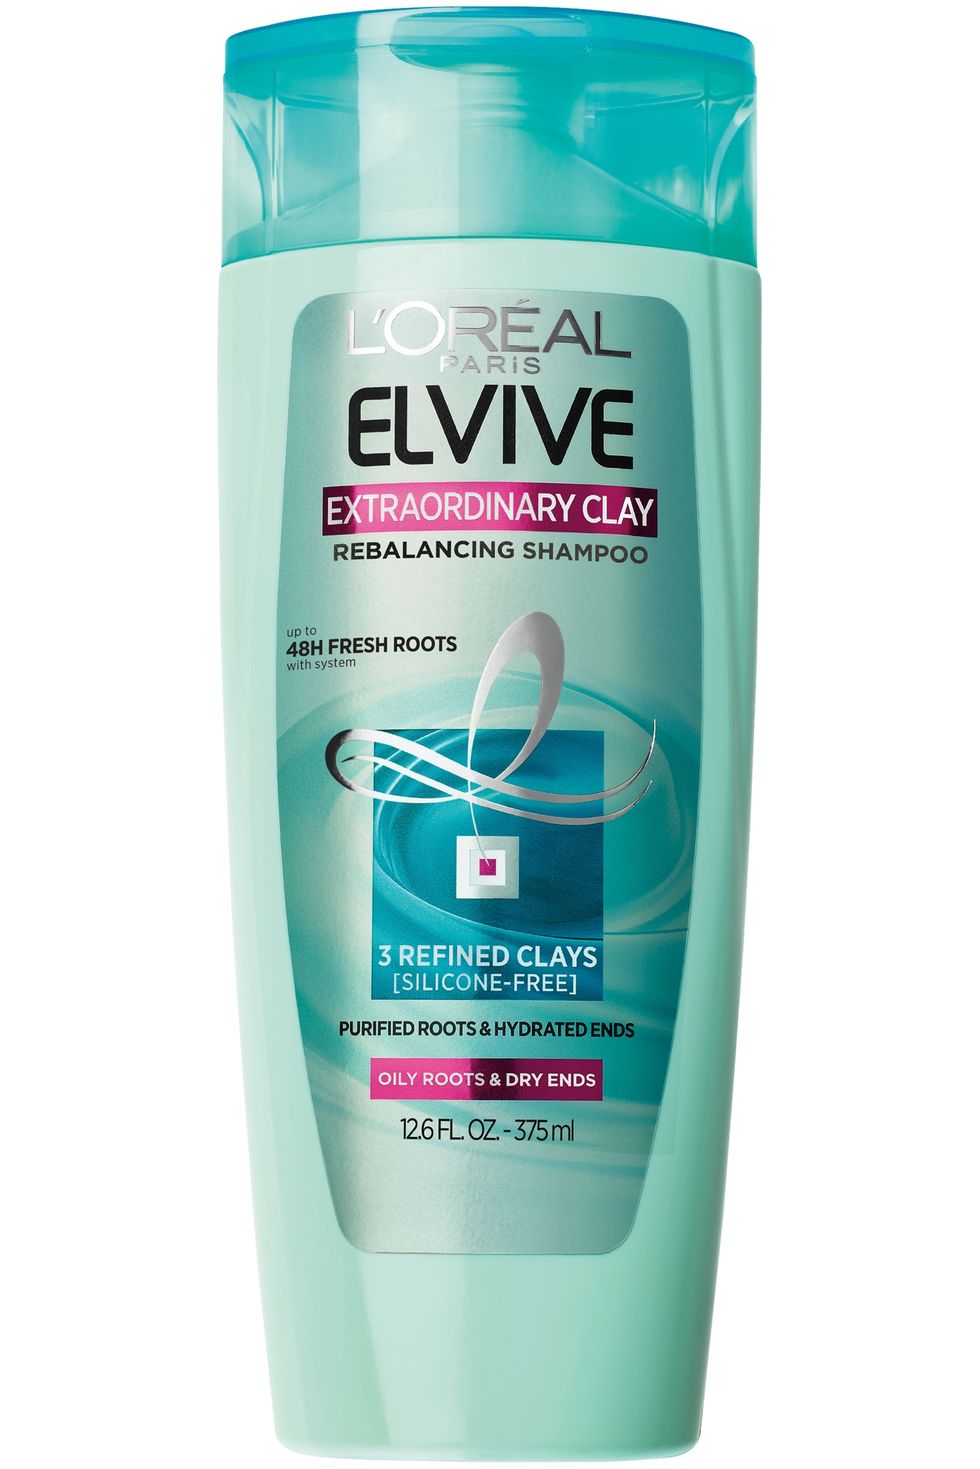 L'Oreal Paris Elvive Extraordinary Clay Rebalancing Shampoo